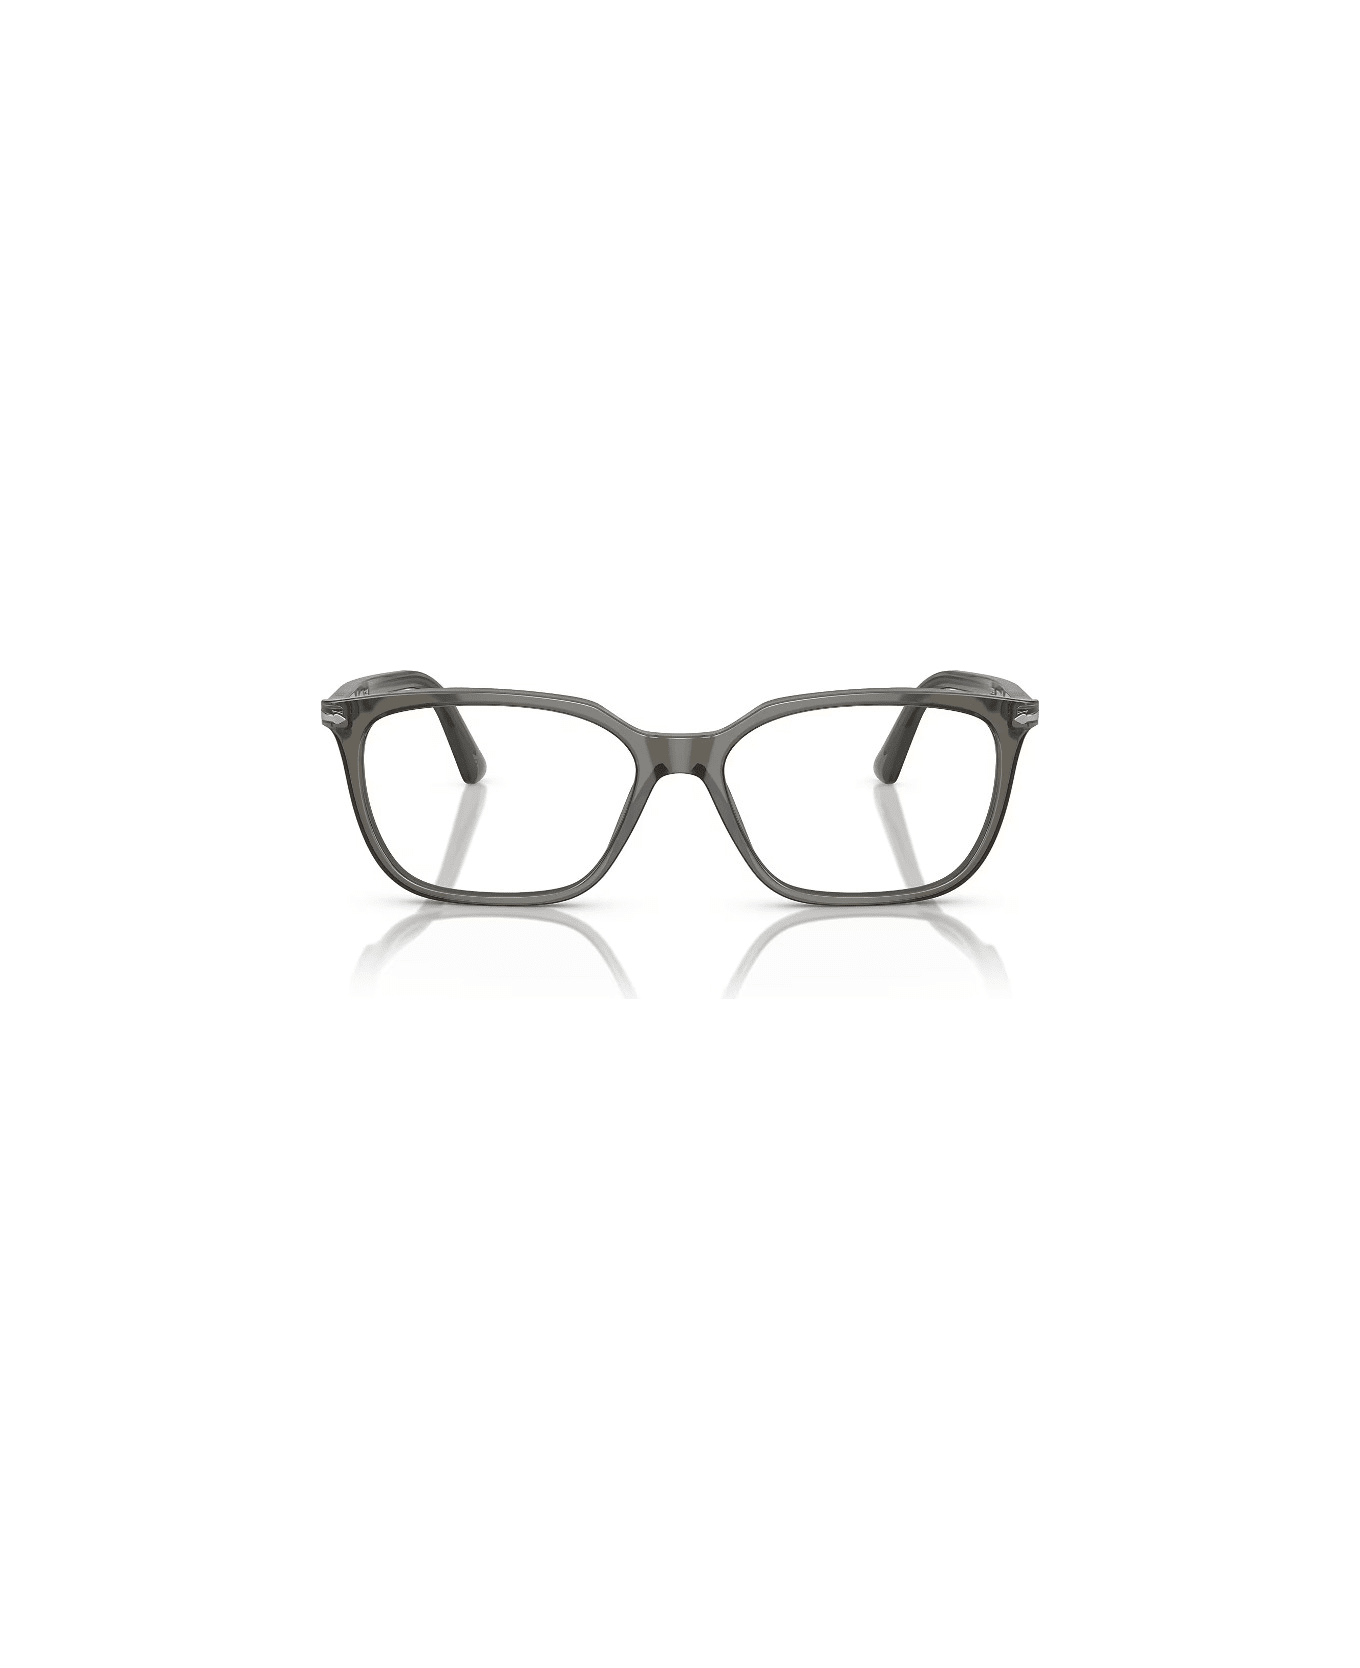 Persol PO3098 1103 Glasses - Grigio アイウェア